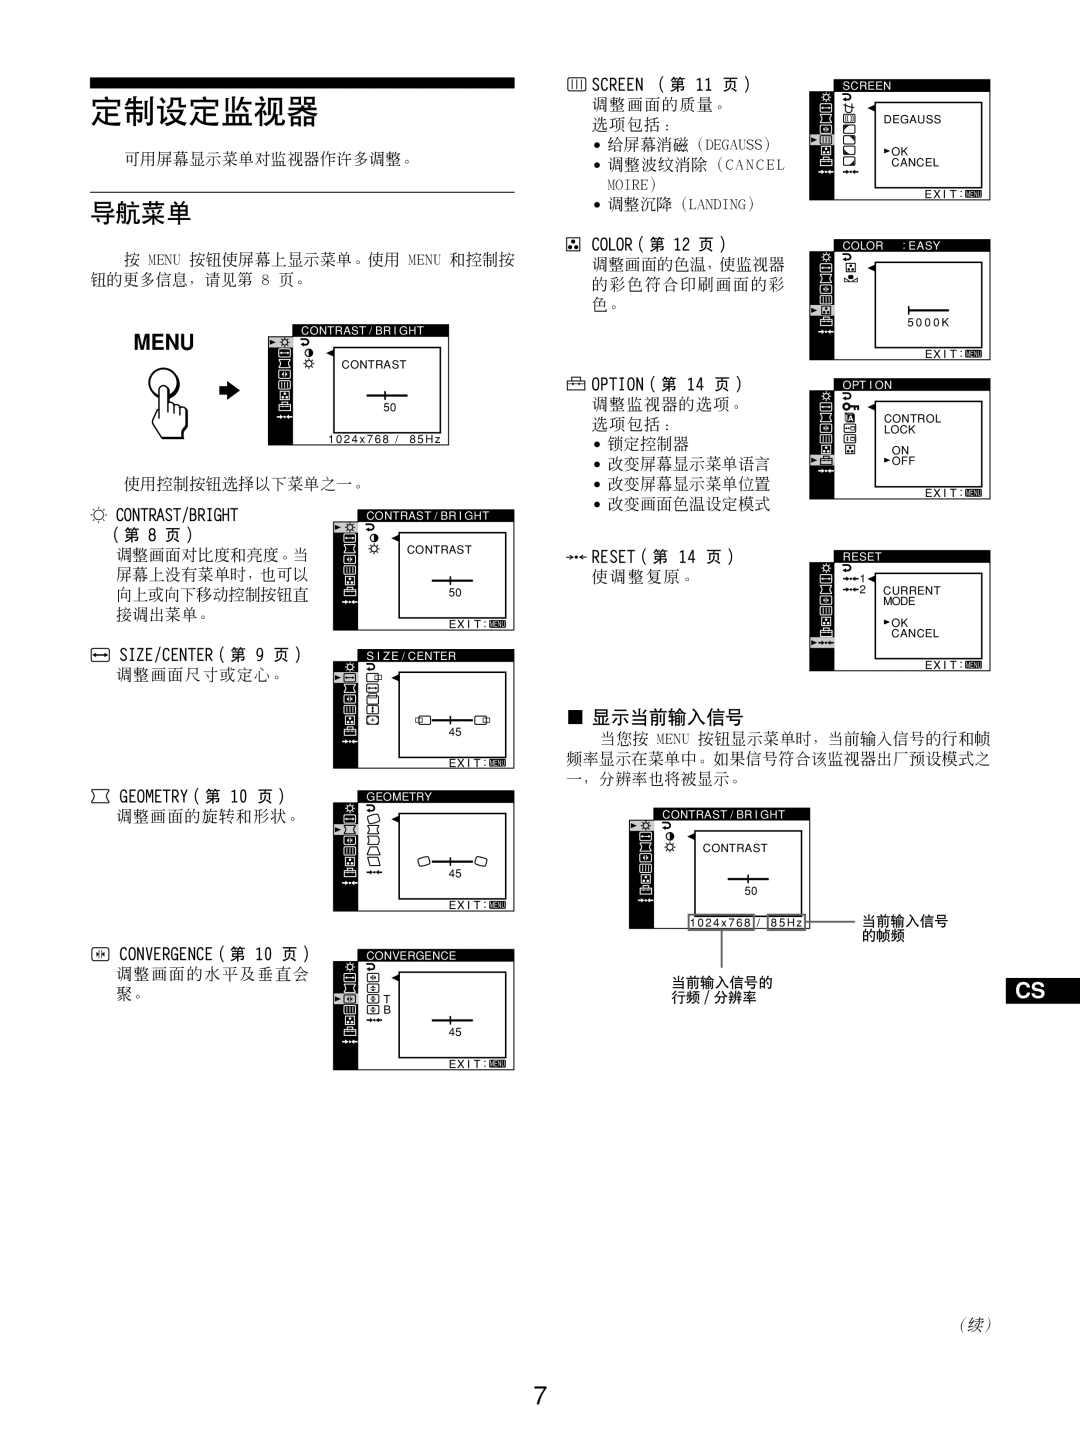 Sony GDM-5510 operating instructions 定制设定监视器, 导航菜单, Menu, 显示当前输入信号 